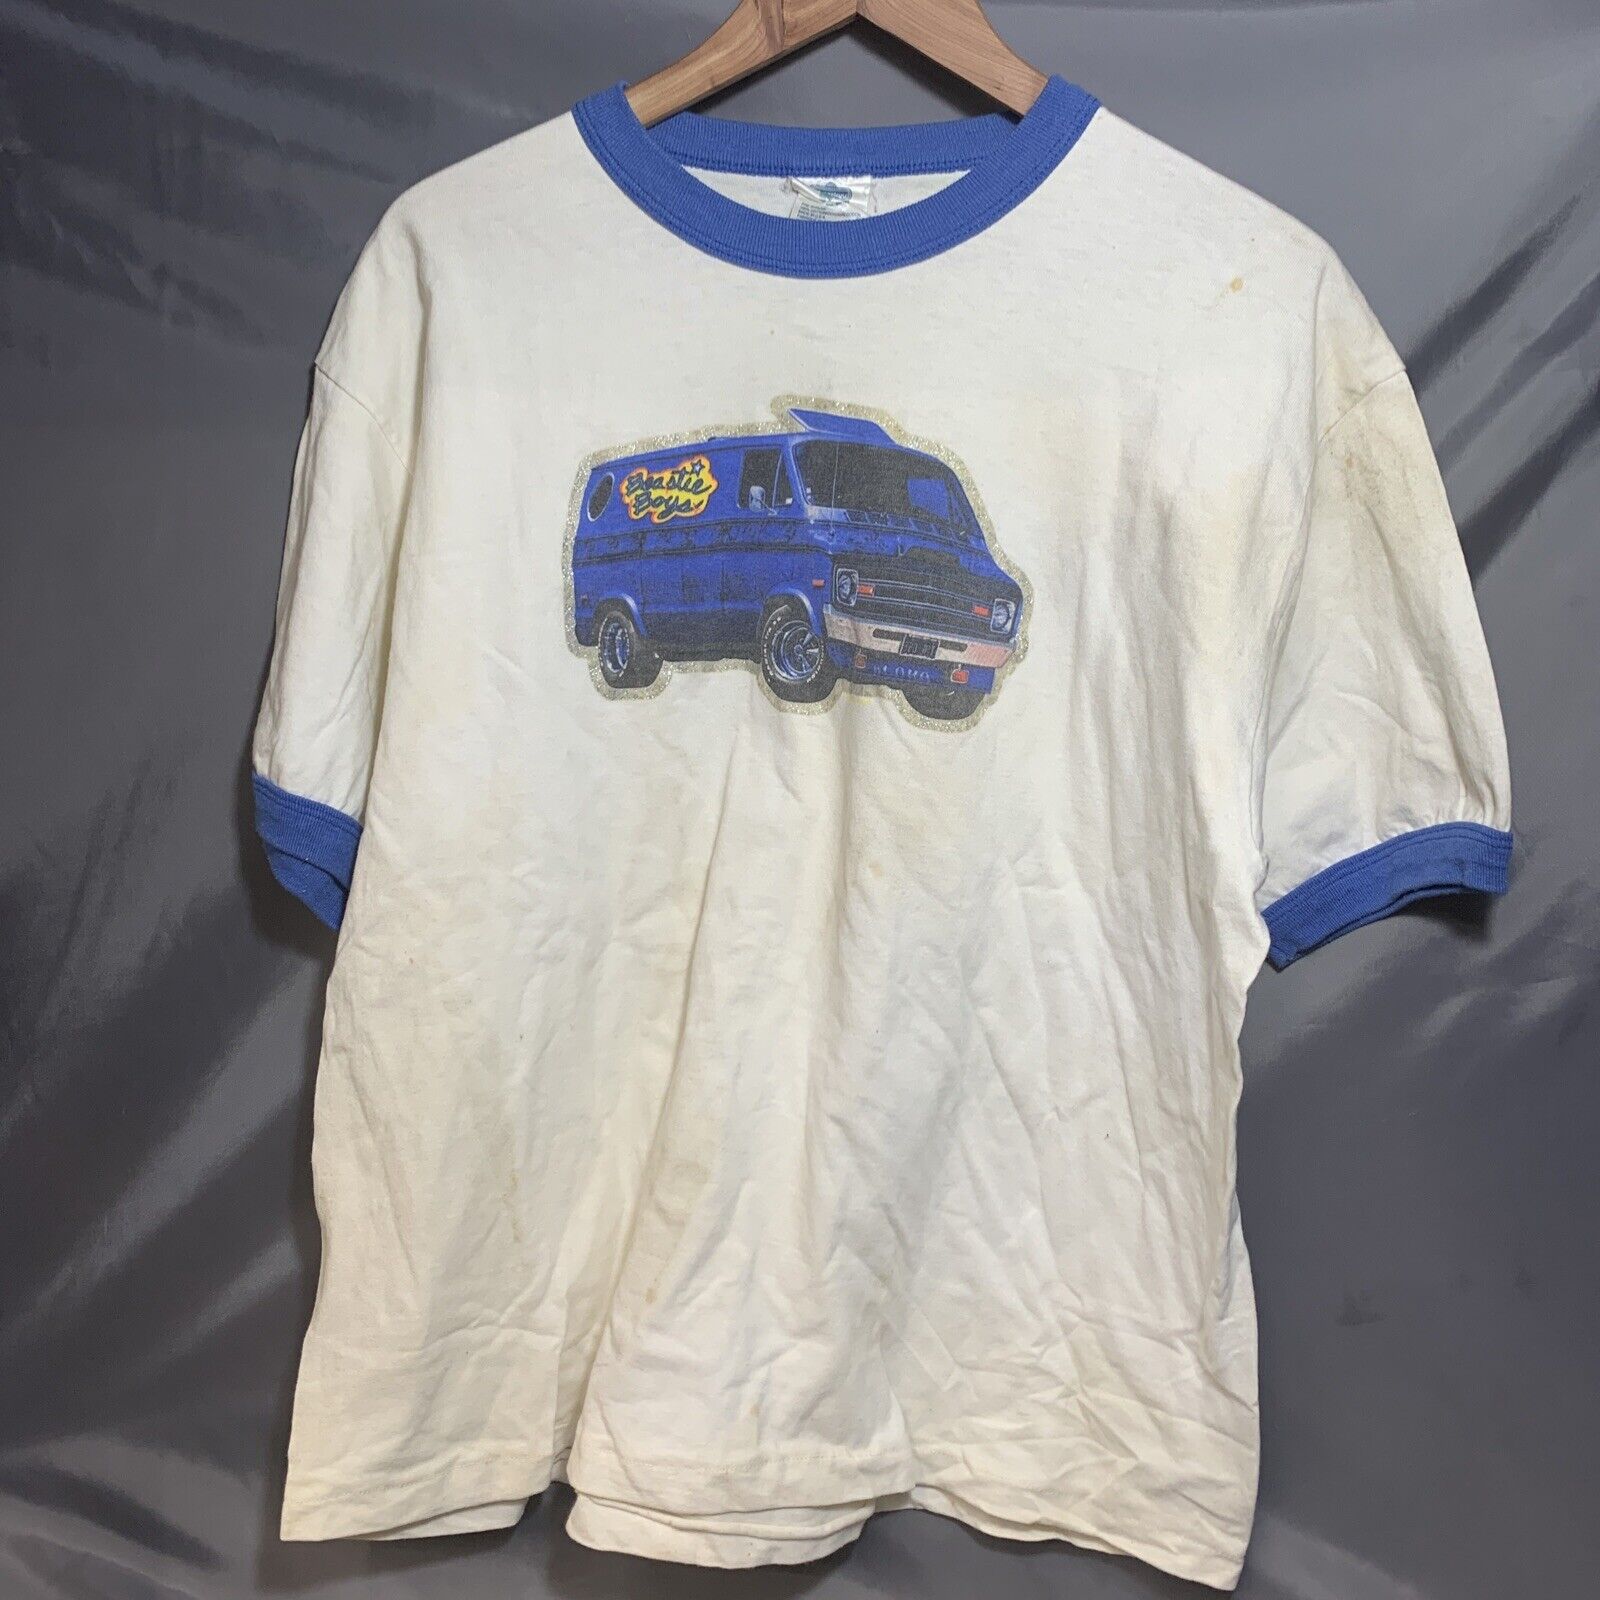 Winterland Beastie Boys Shirt 1994 Aloha Mr Hand Ringer White Blue L Made In Usa